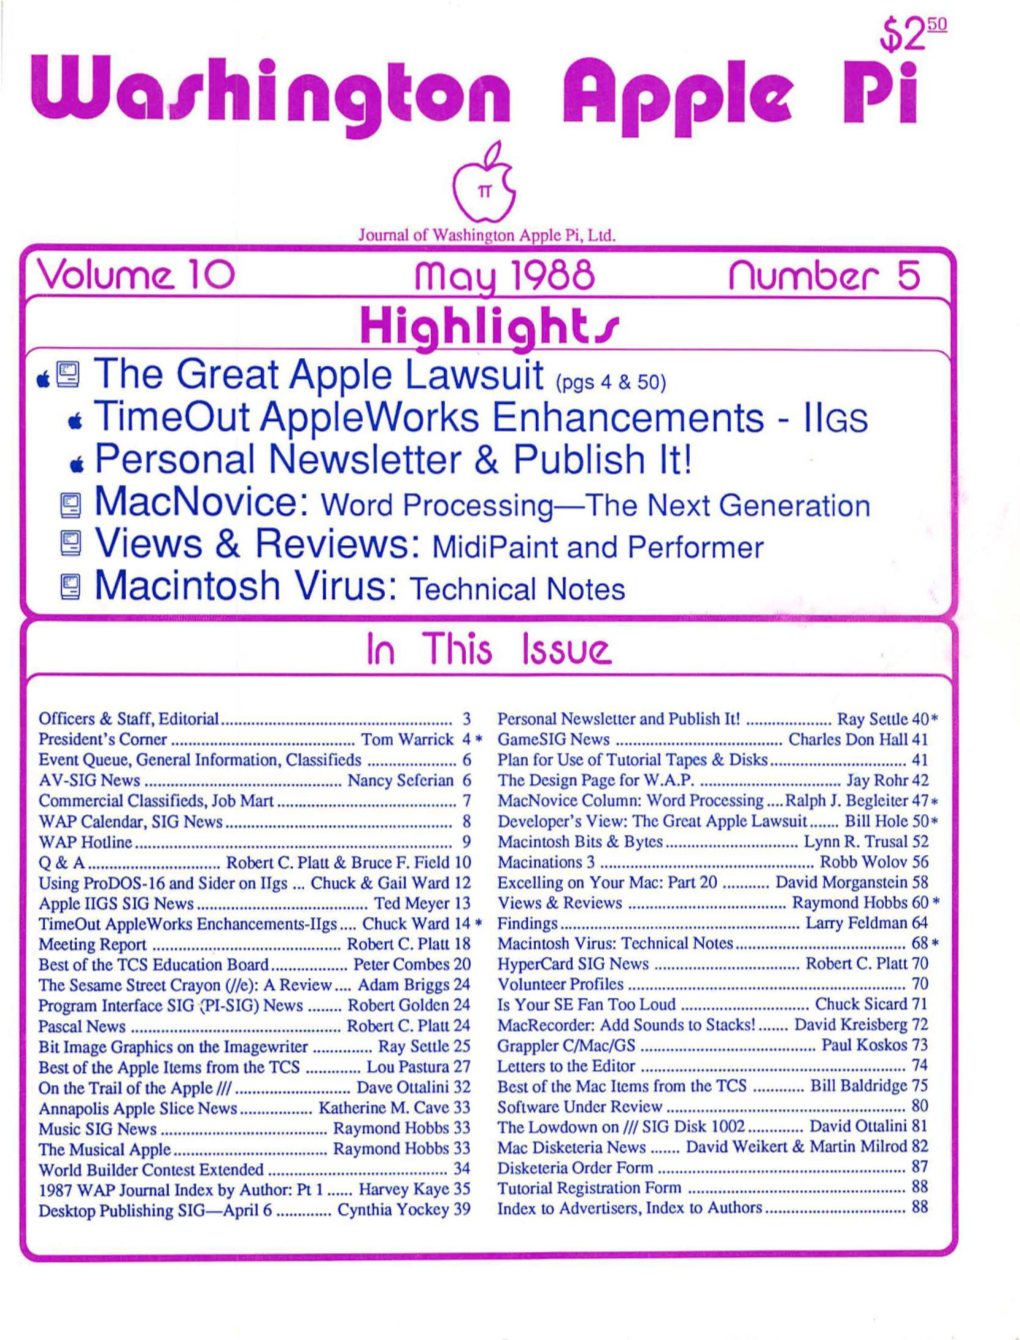 Washington Apple Pi Journal, May 1988